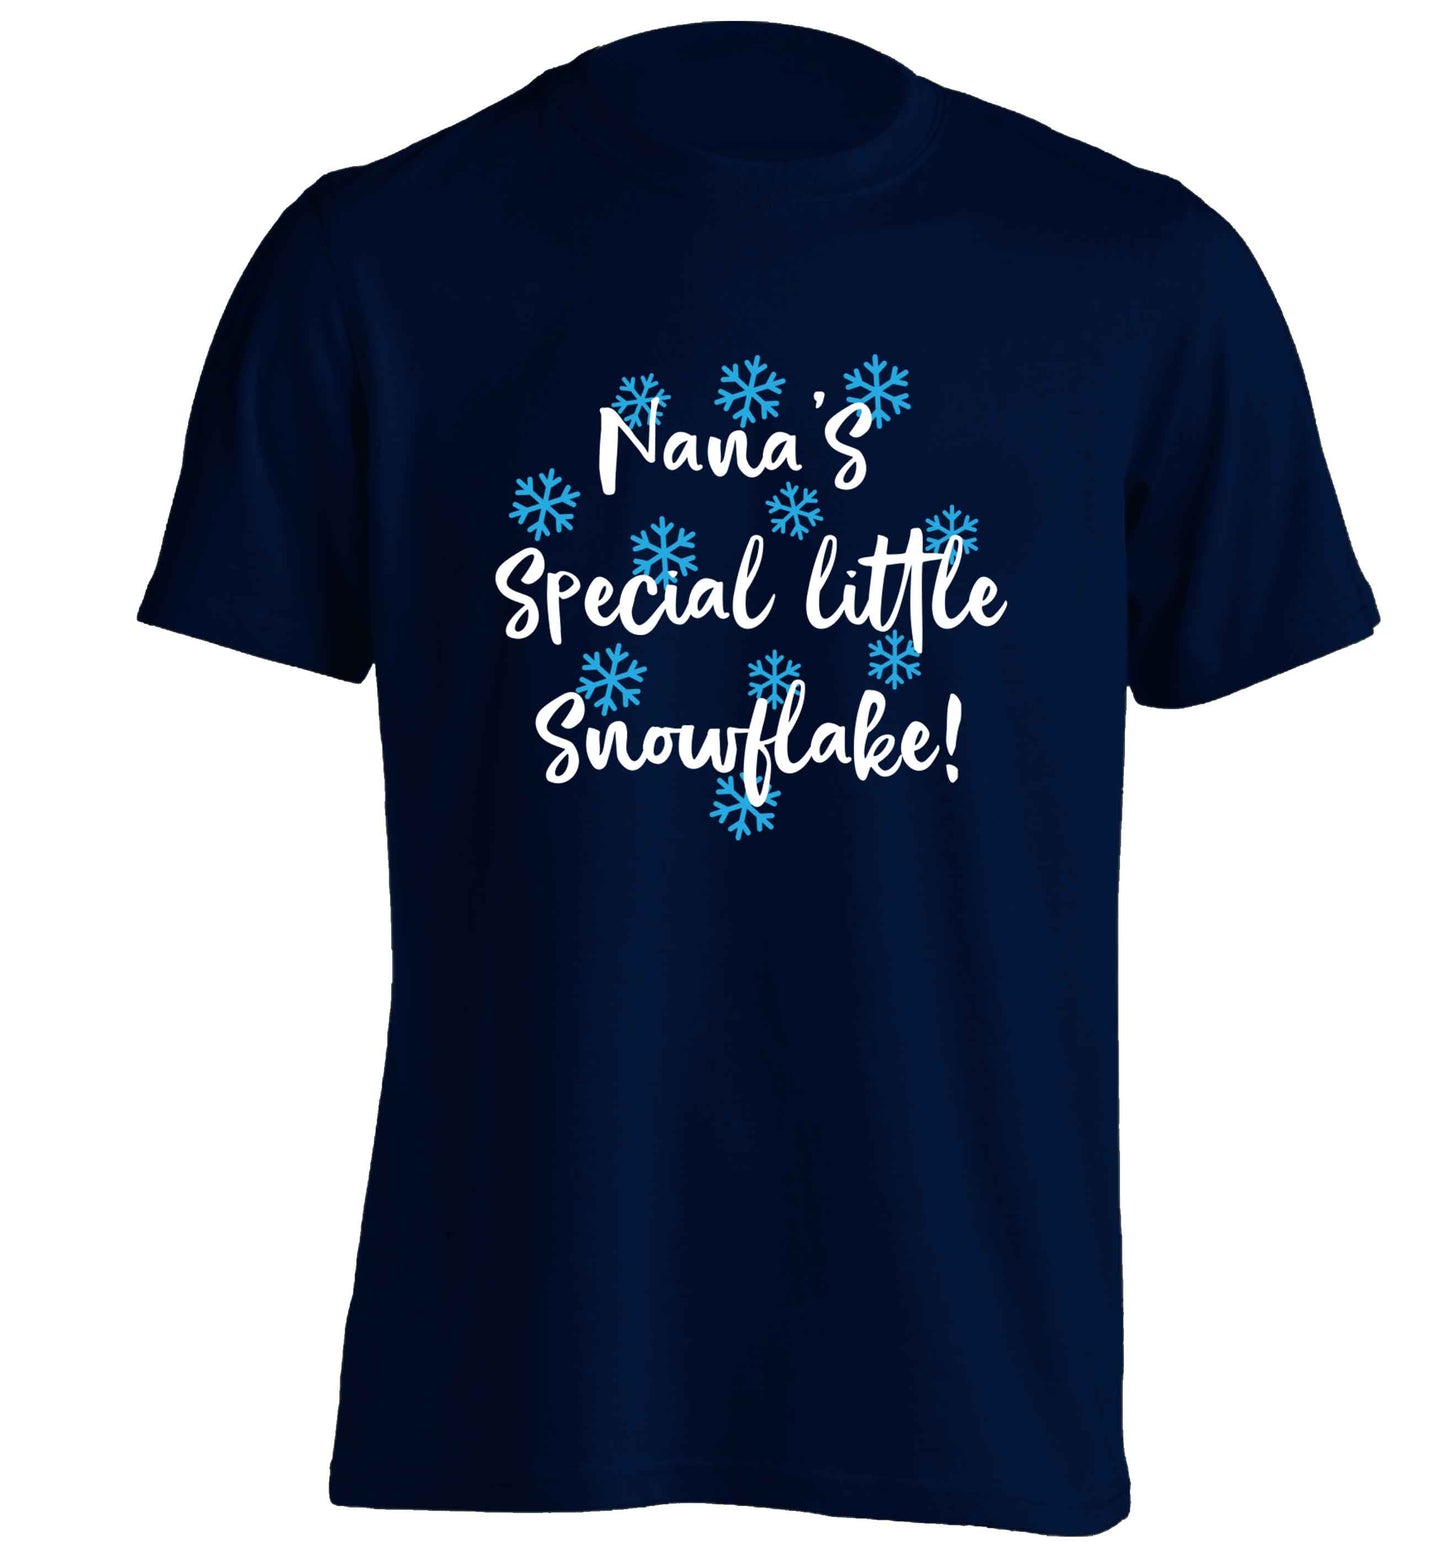 Nana's special little snowflake adults unisex navy Tshirt 2XL